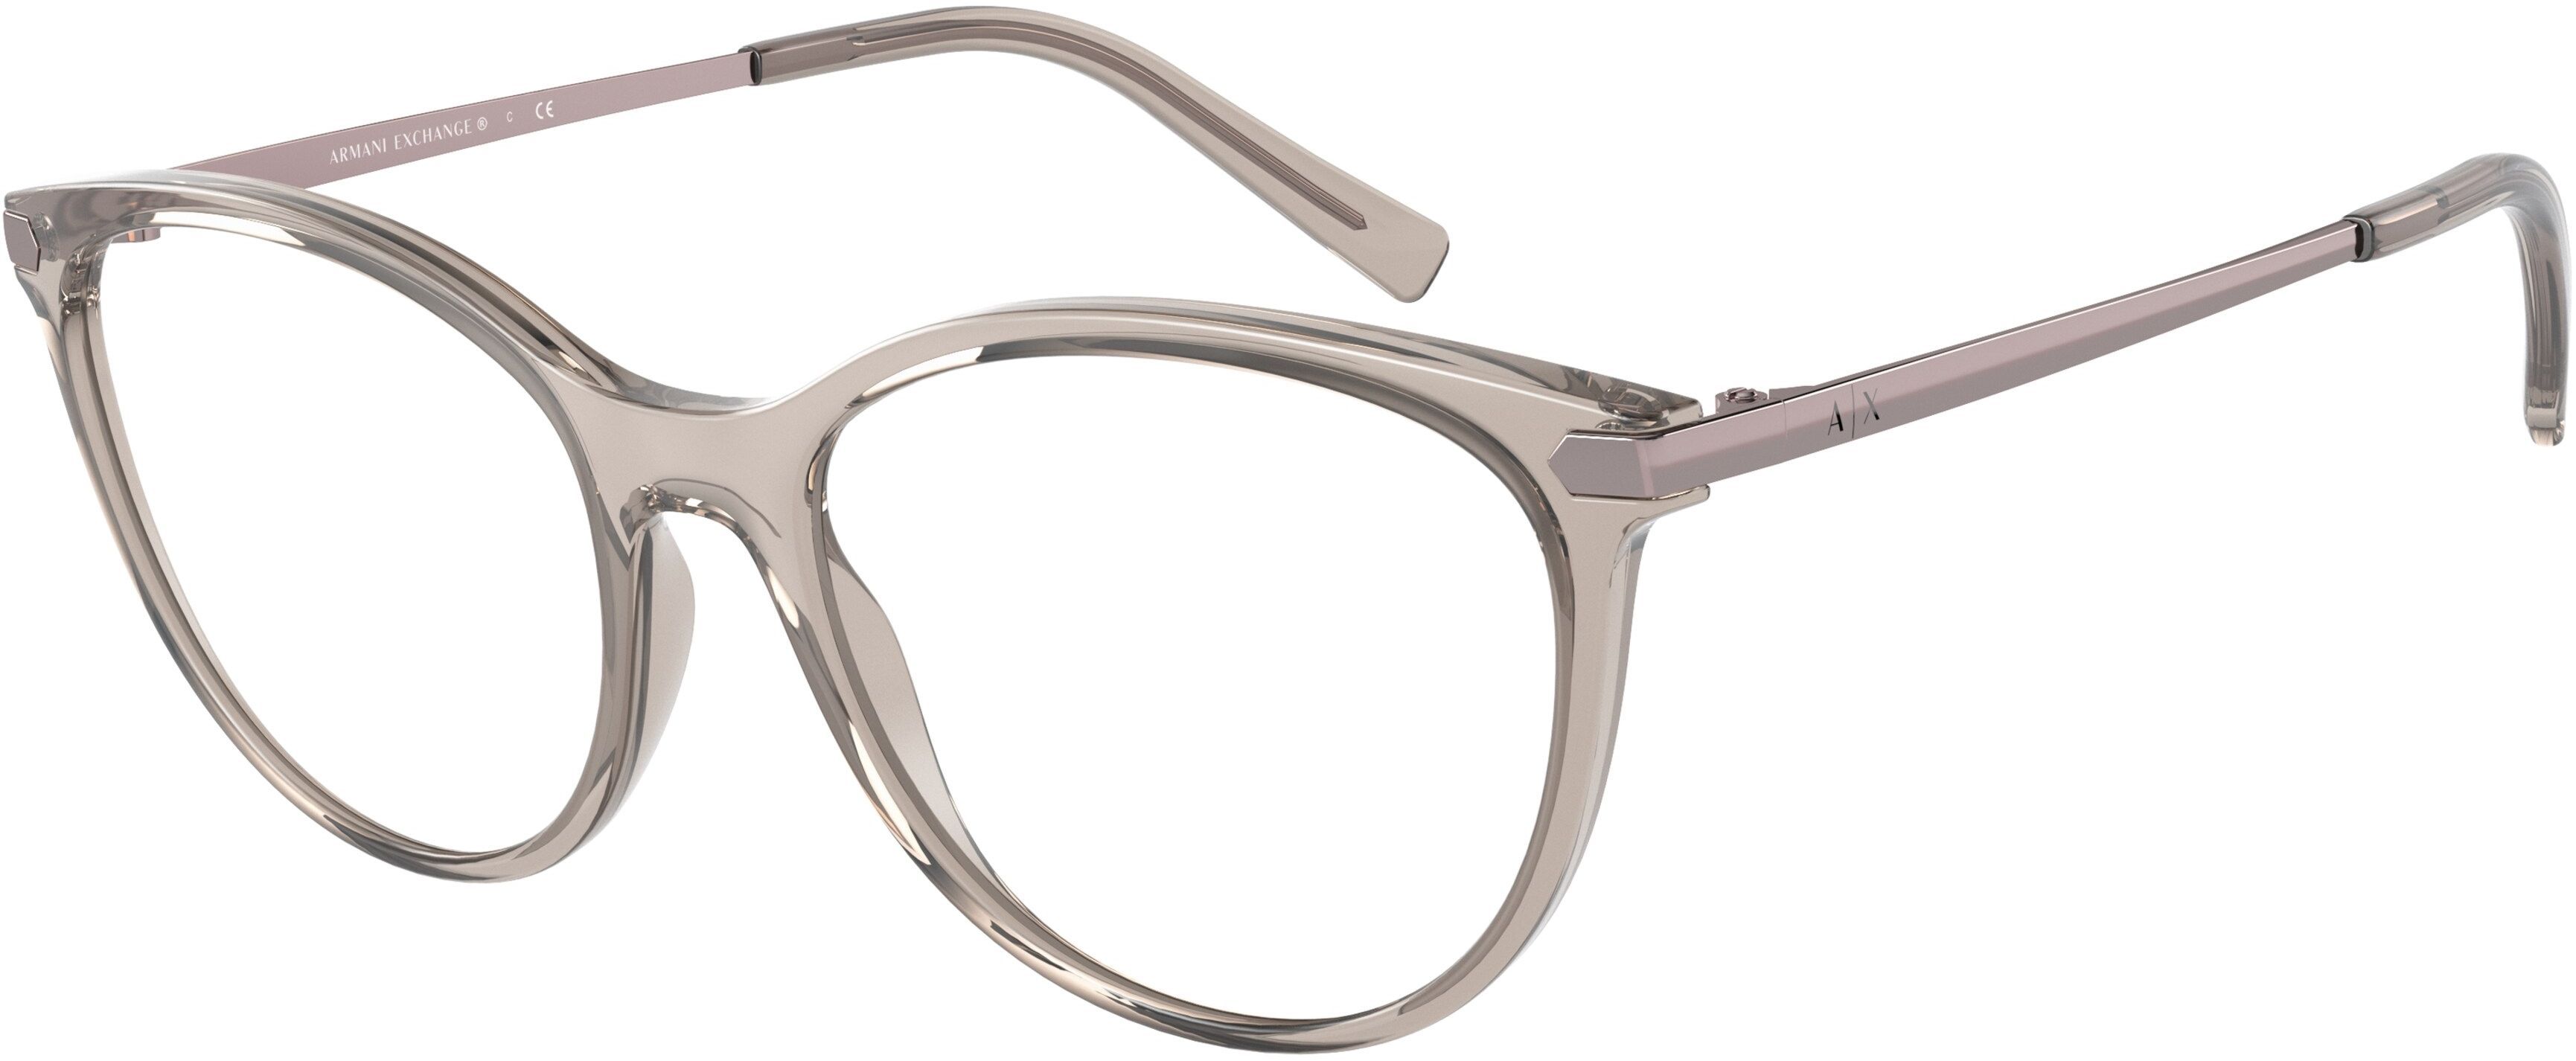 Dioptrické brýle Armani Exchange model 3078, barva obruby béžová lesk, stranice bronzová lesk, kód barevné varianty 8240. 